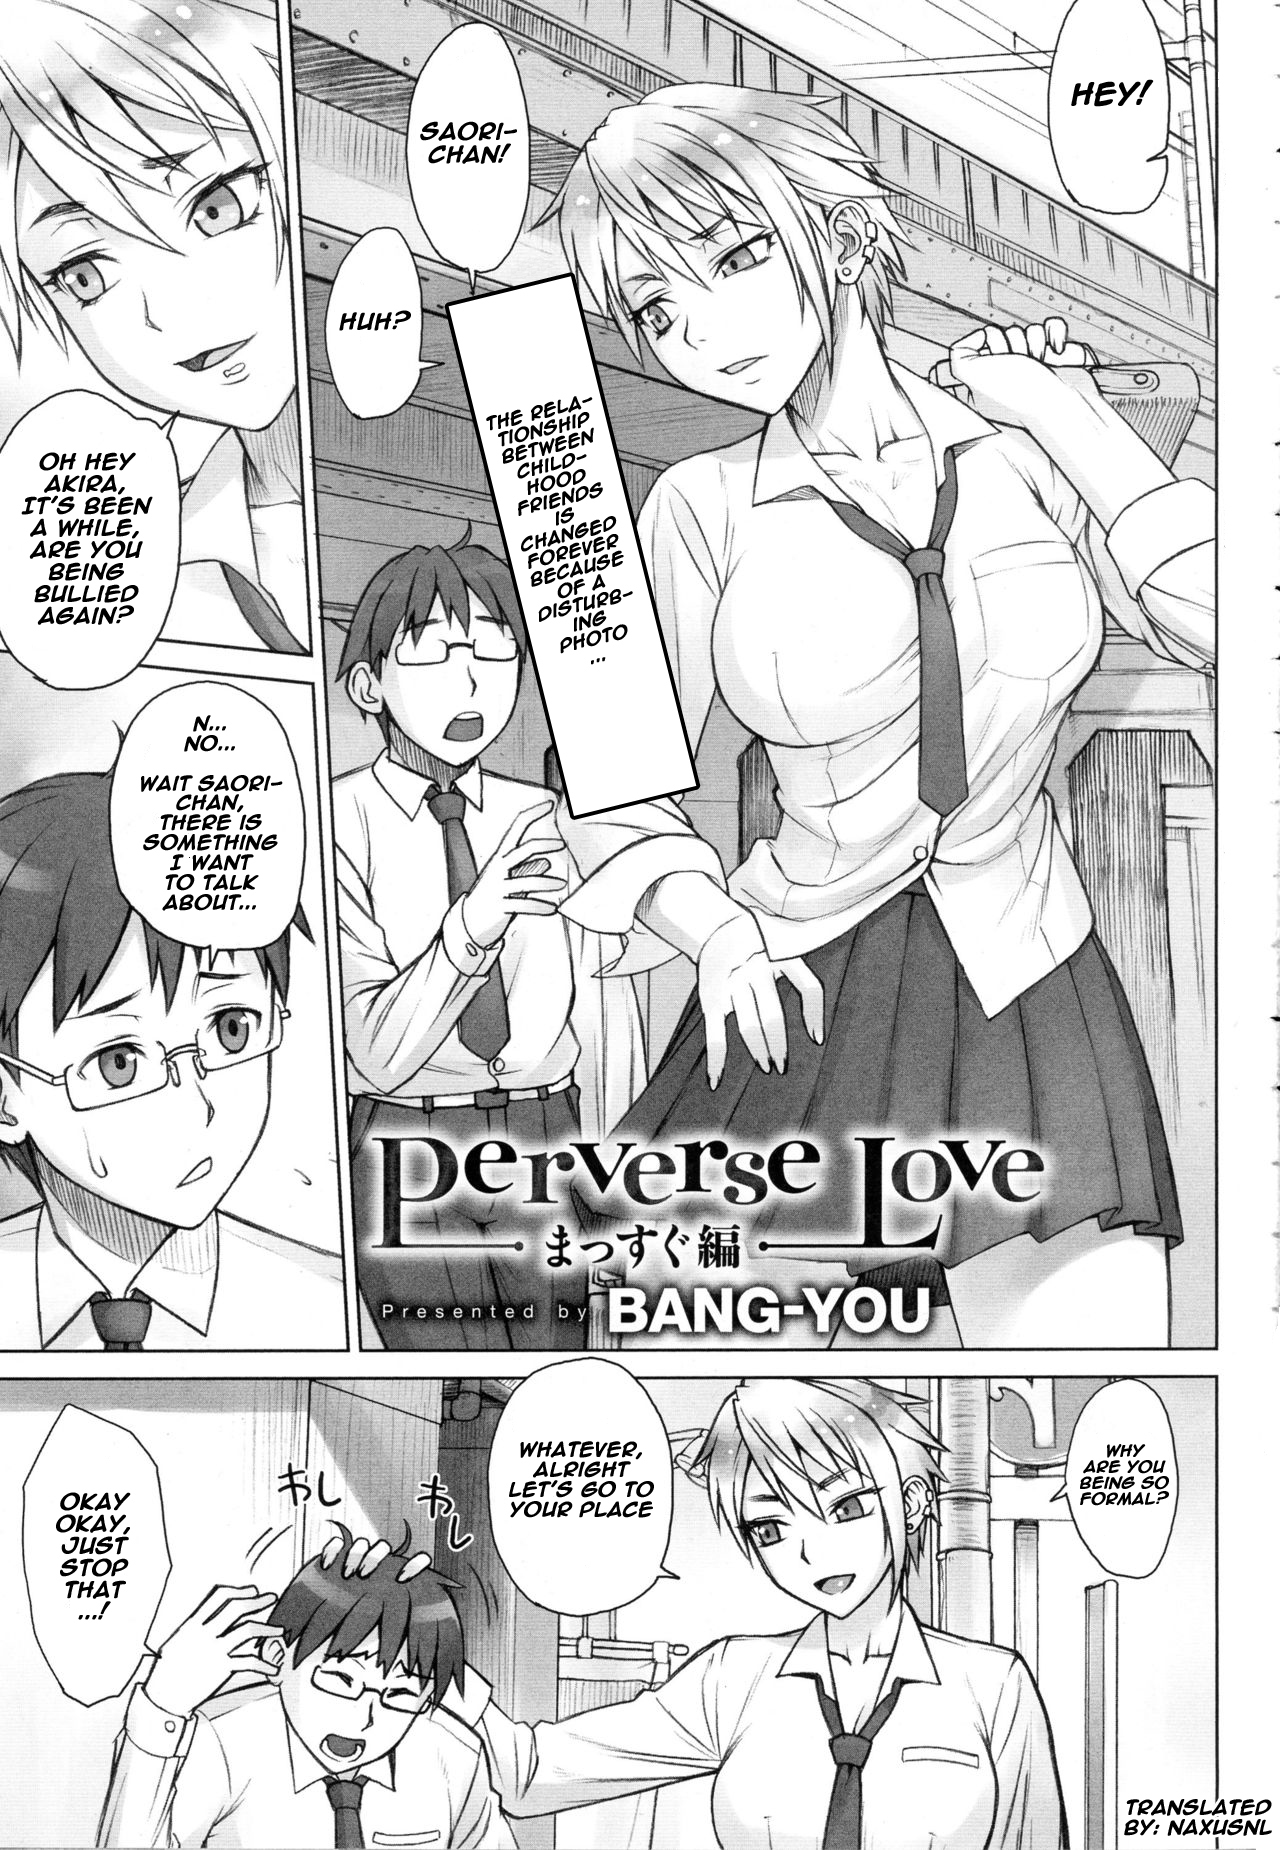 Bang-You - Perverse Love Hentai Comic